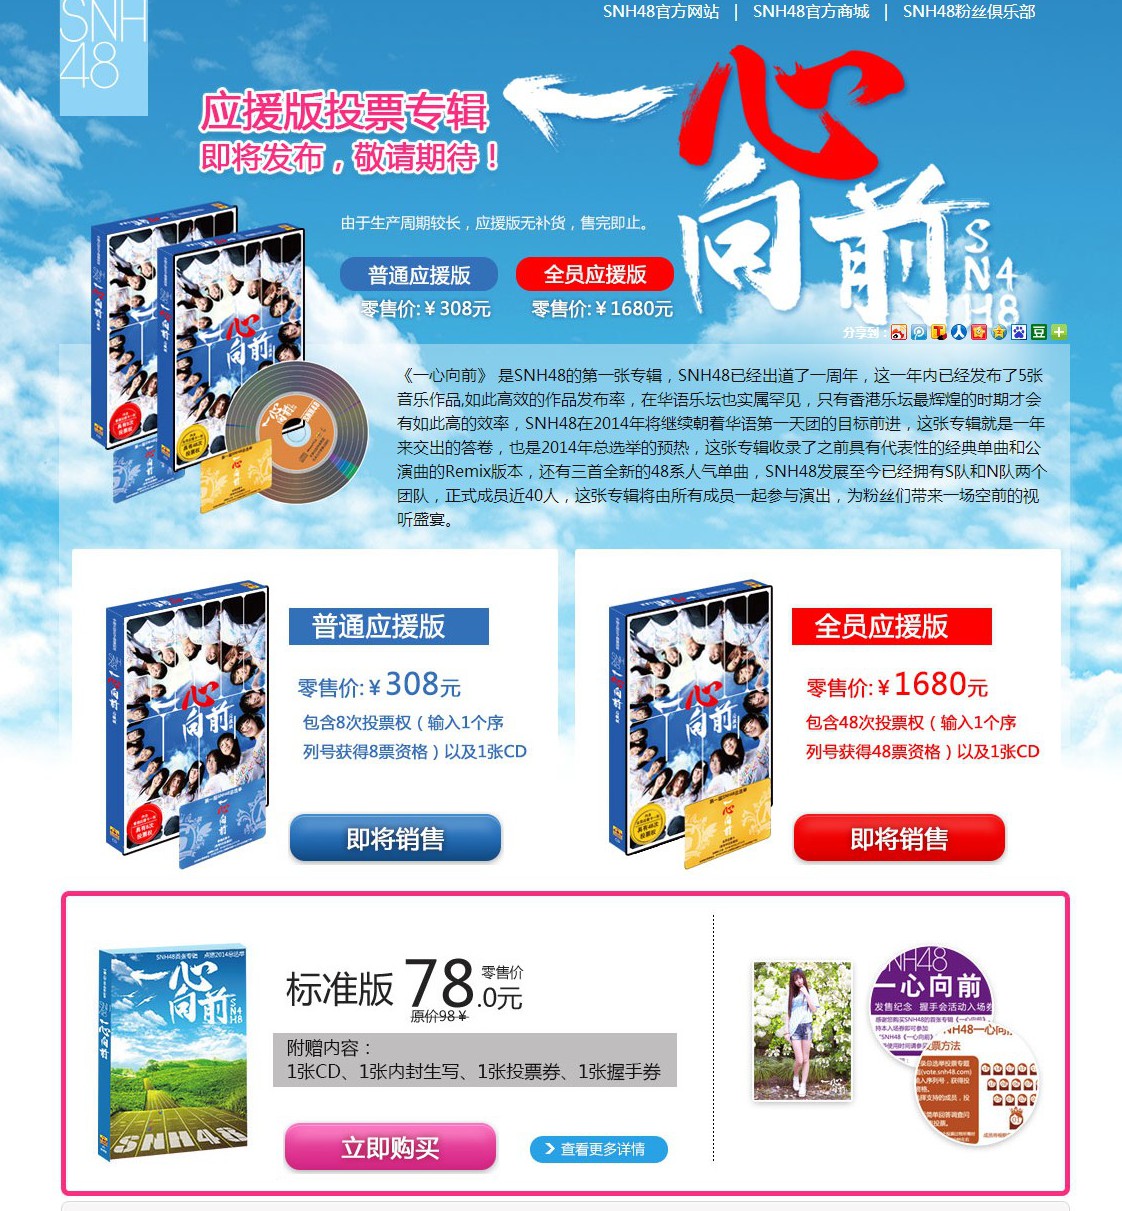 【SNH48】48票投票券付きの『全員応援版CD』の詳細が発表されました！